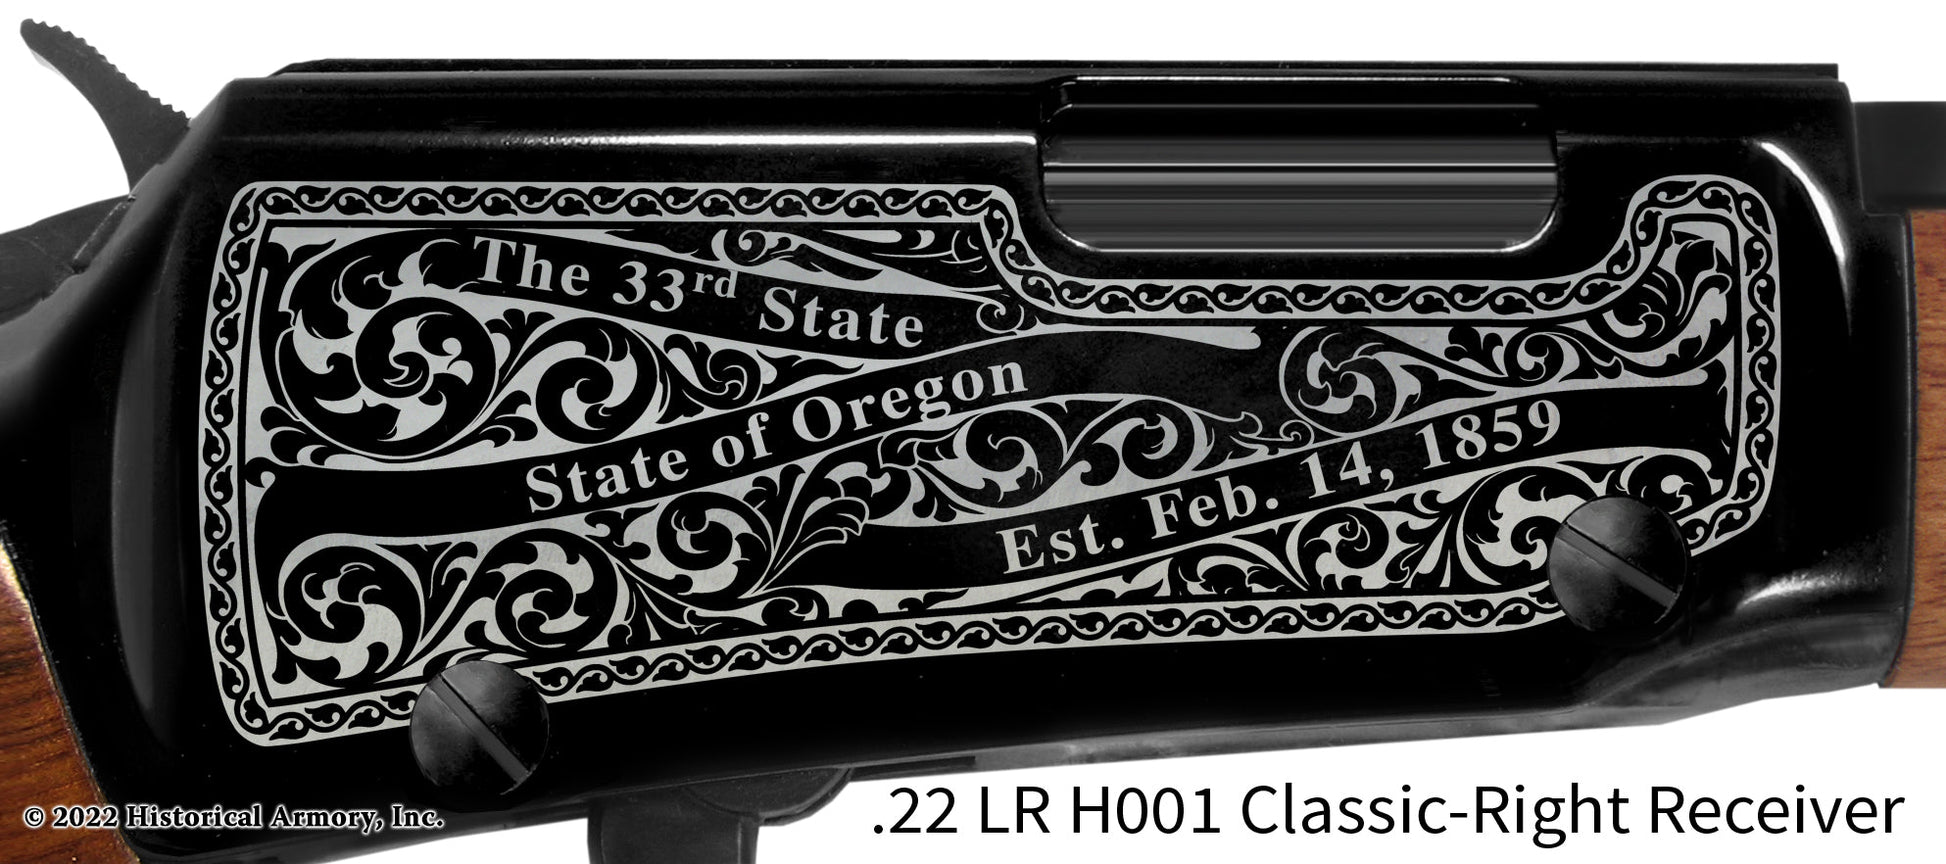 Lake County Oregon Engraved Henry H001 Rifle